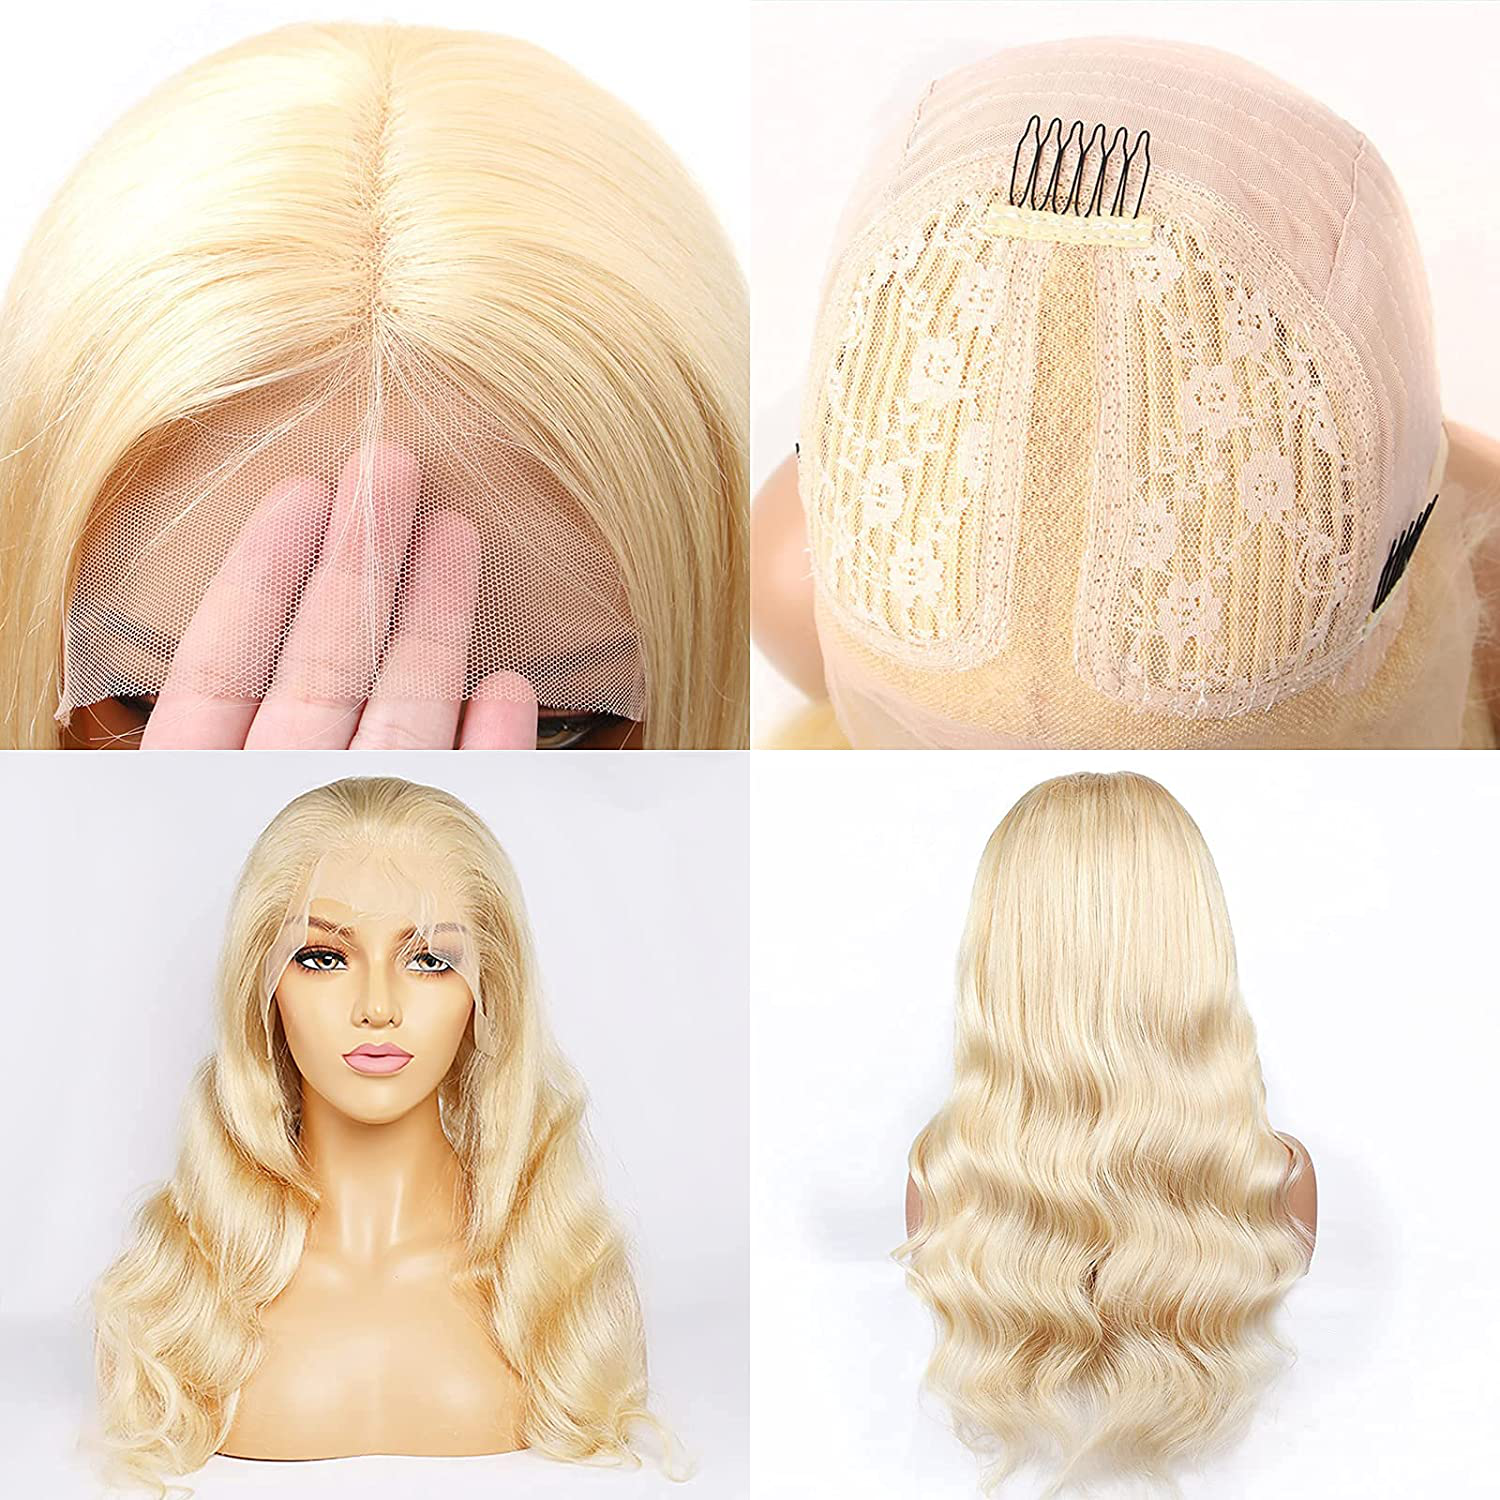 Blonde 613 Silky Straight Human Hair Brazilian Virgin Hair Extensions